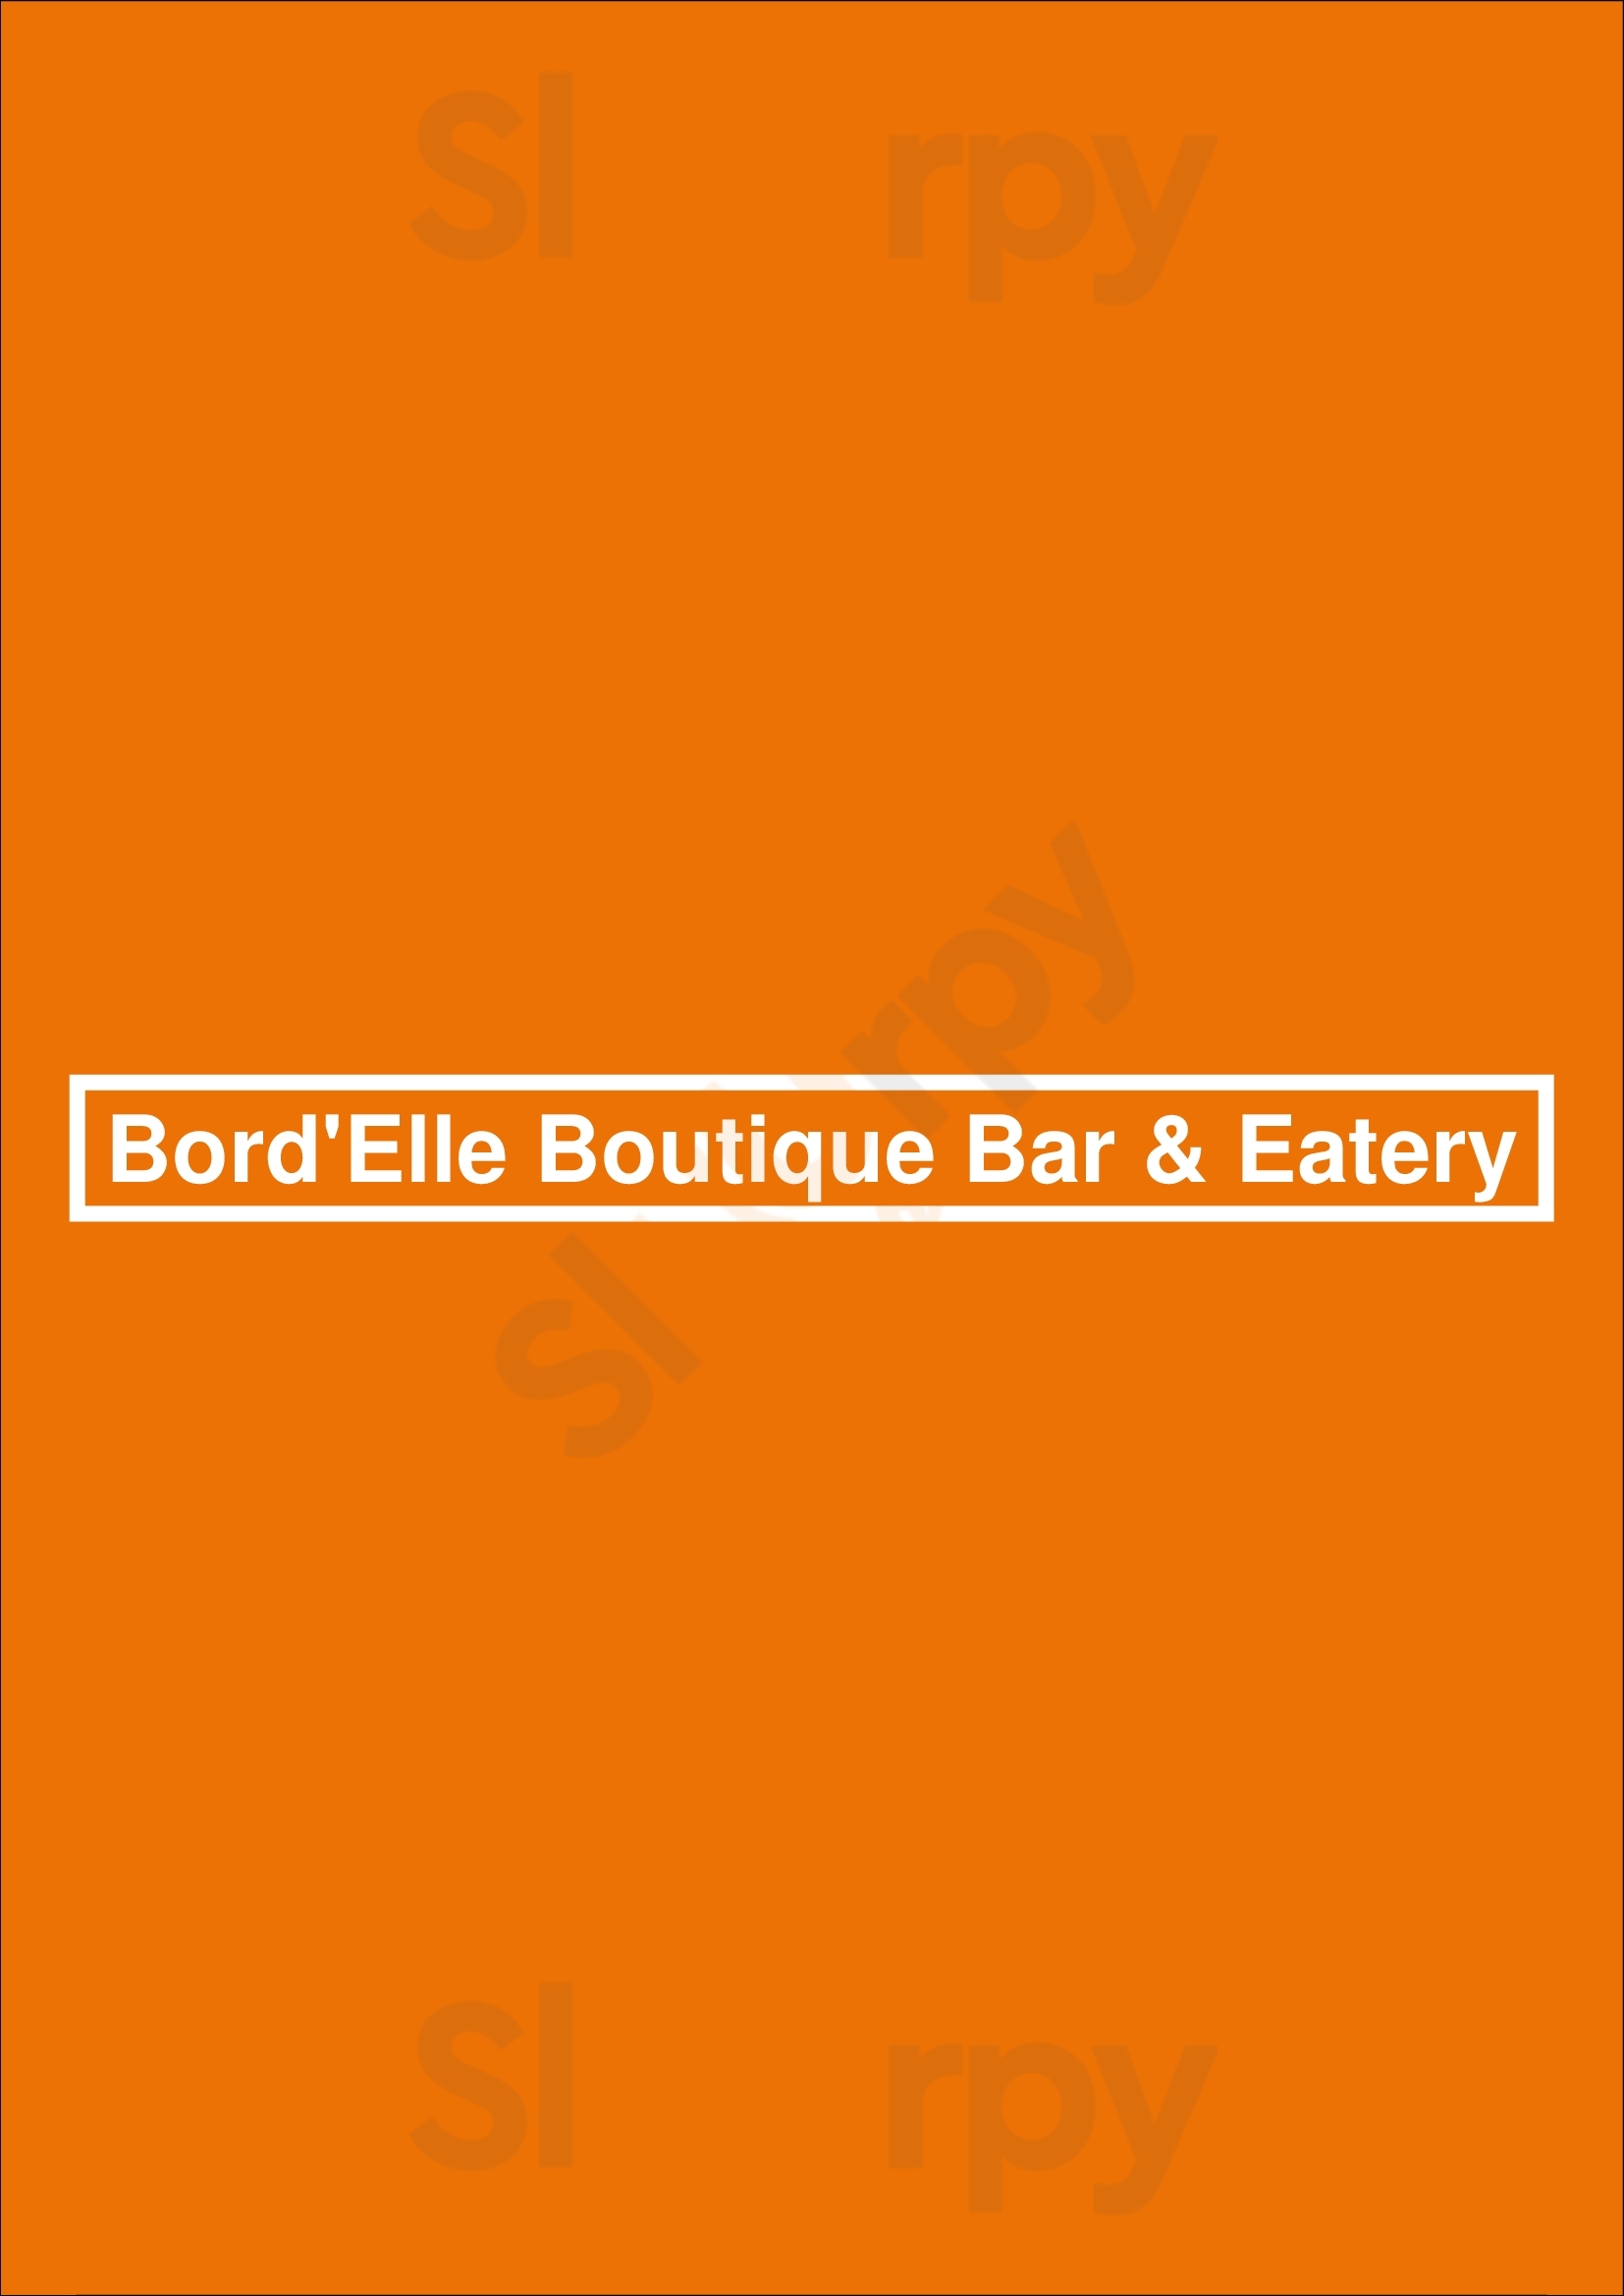 Bord'elle Boutique Bar & Eatery Montreal Menu - 1